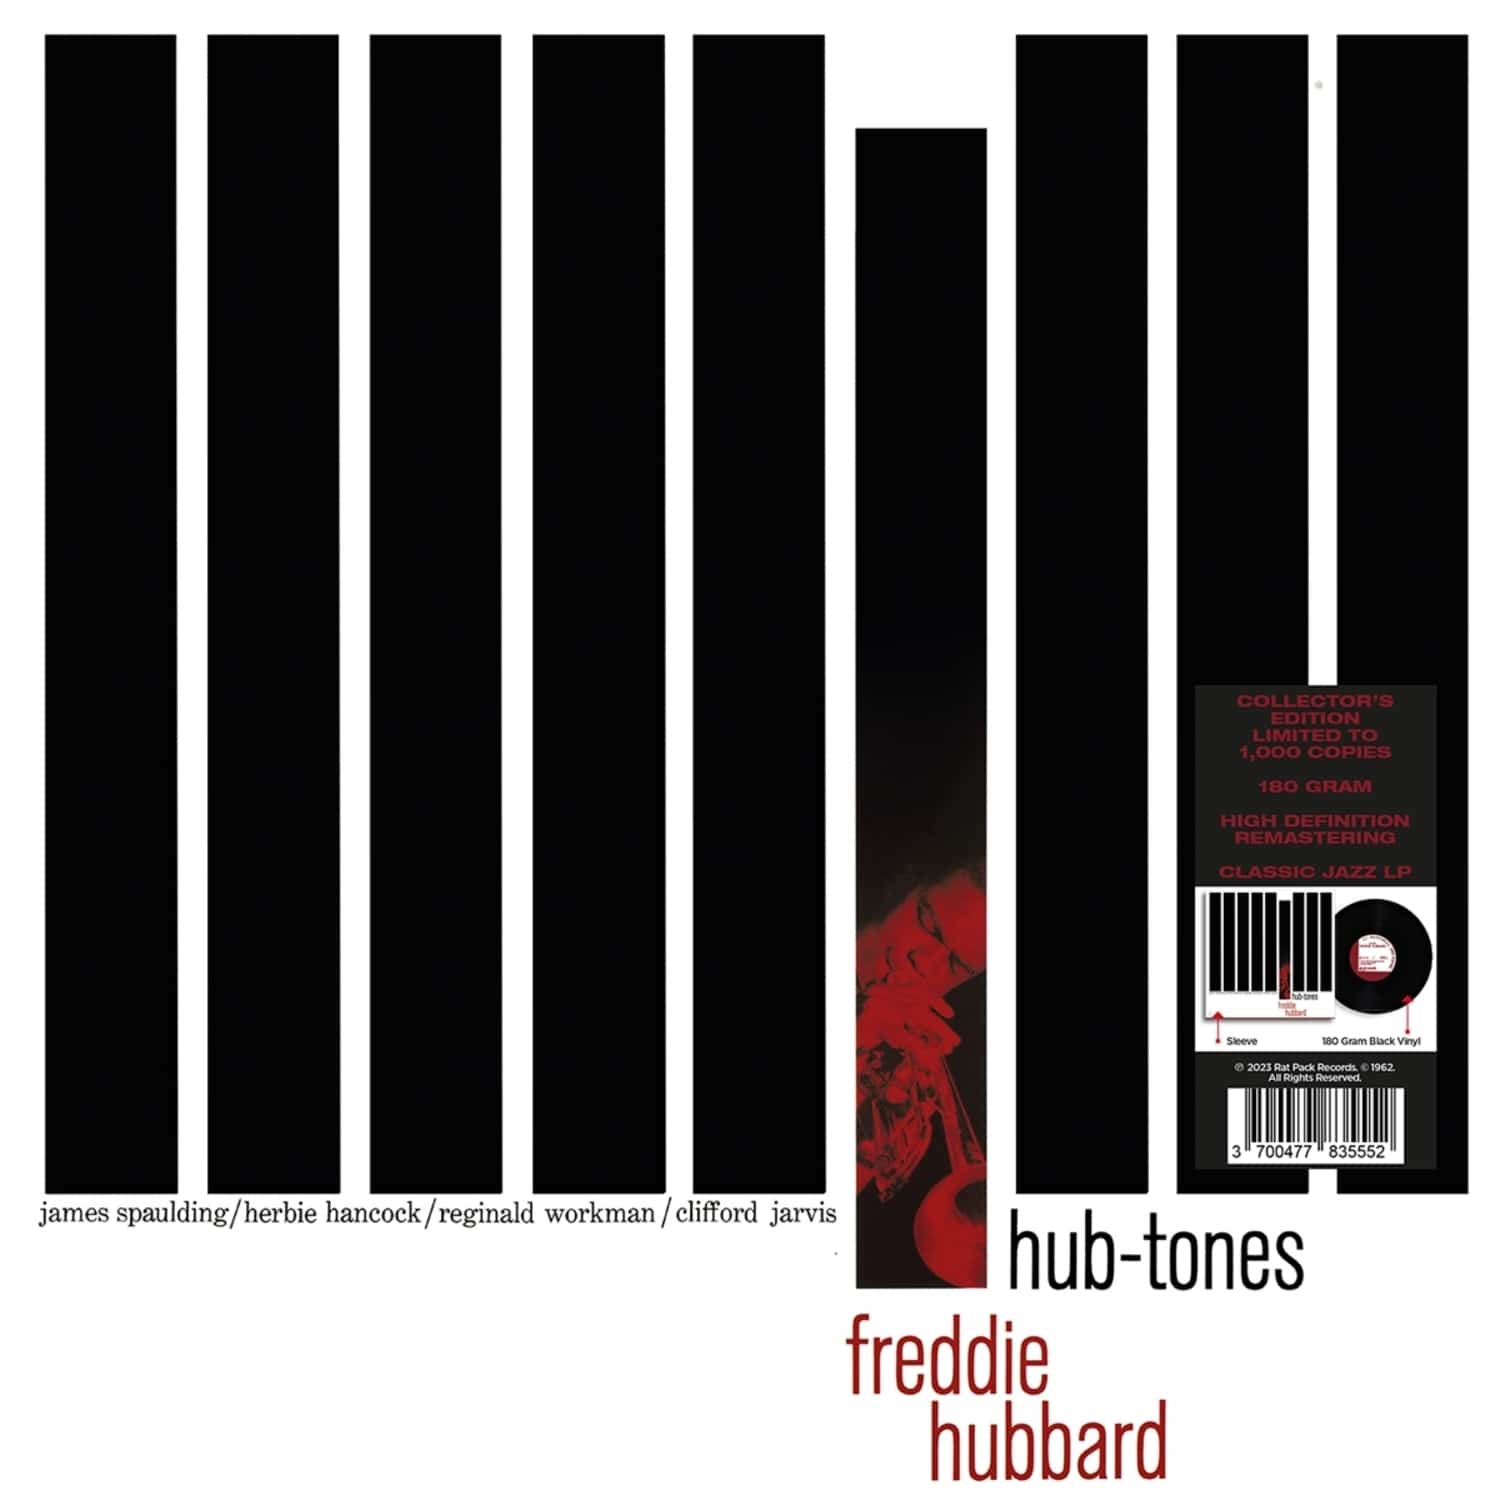  Freddie Hubbard - HUB-TONES 